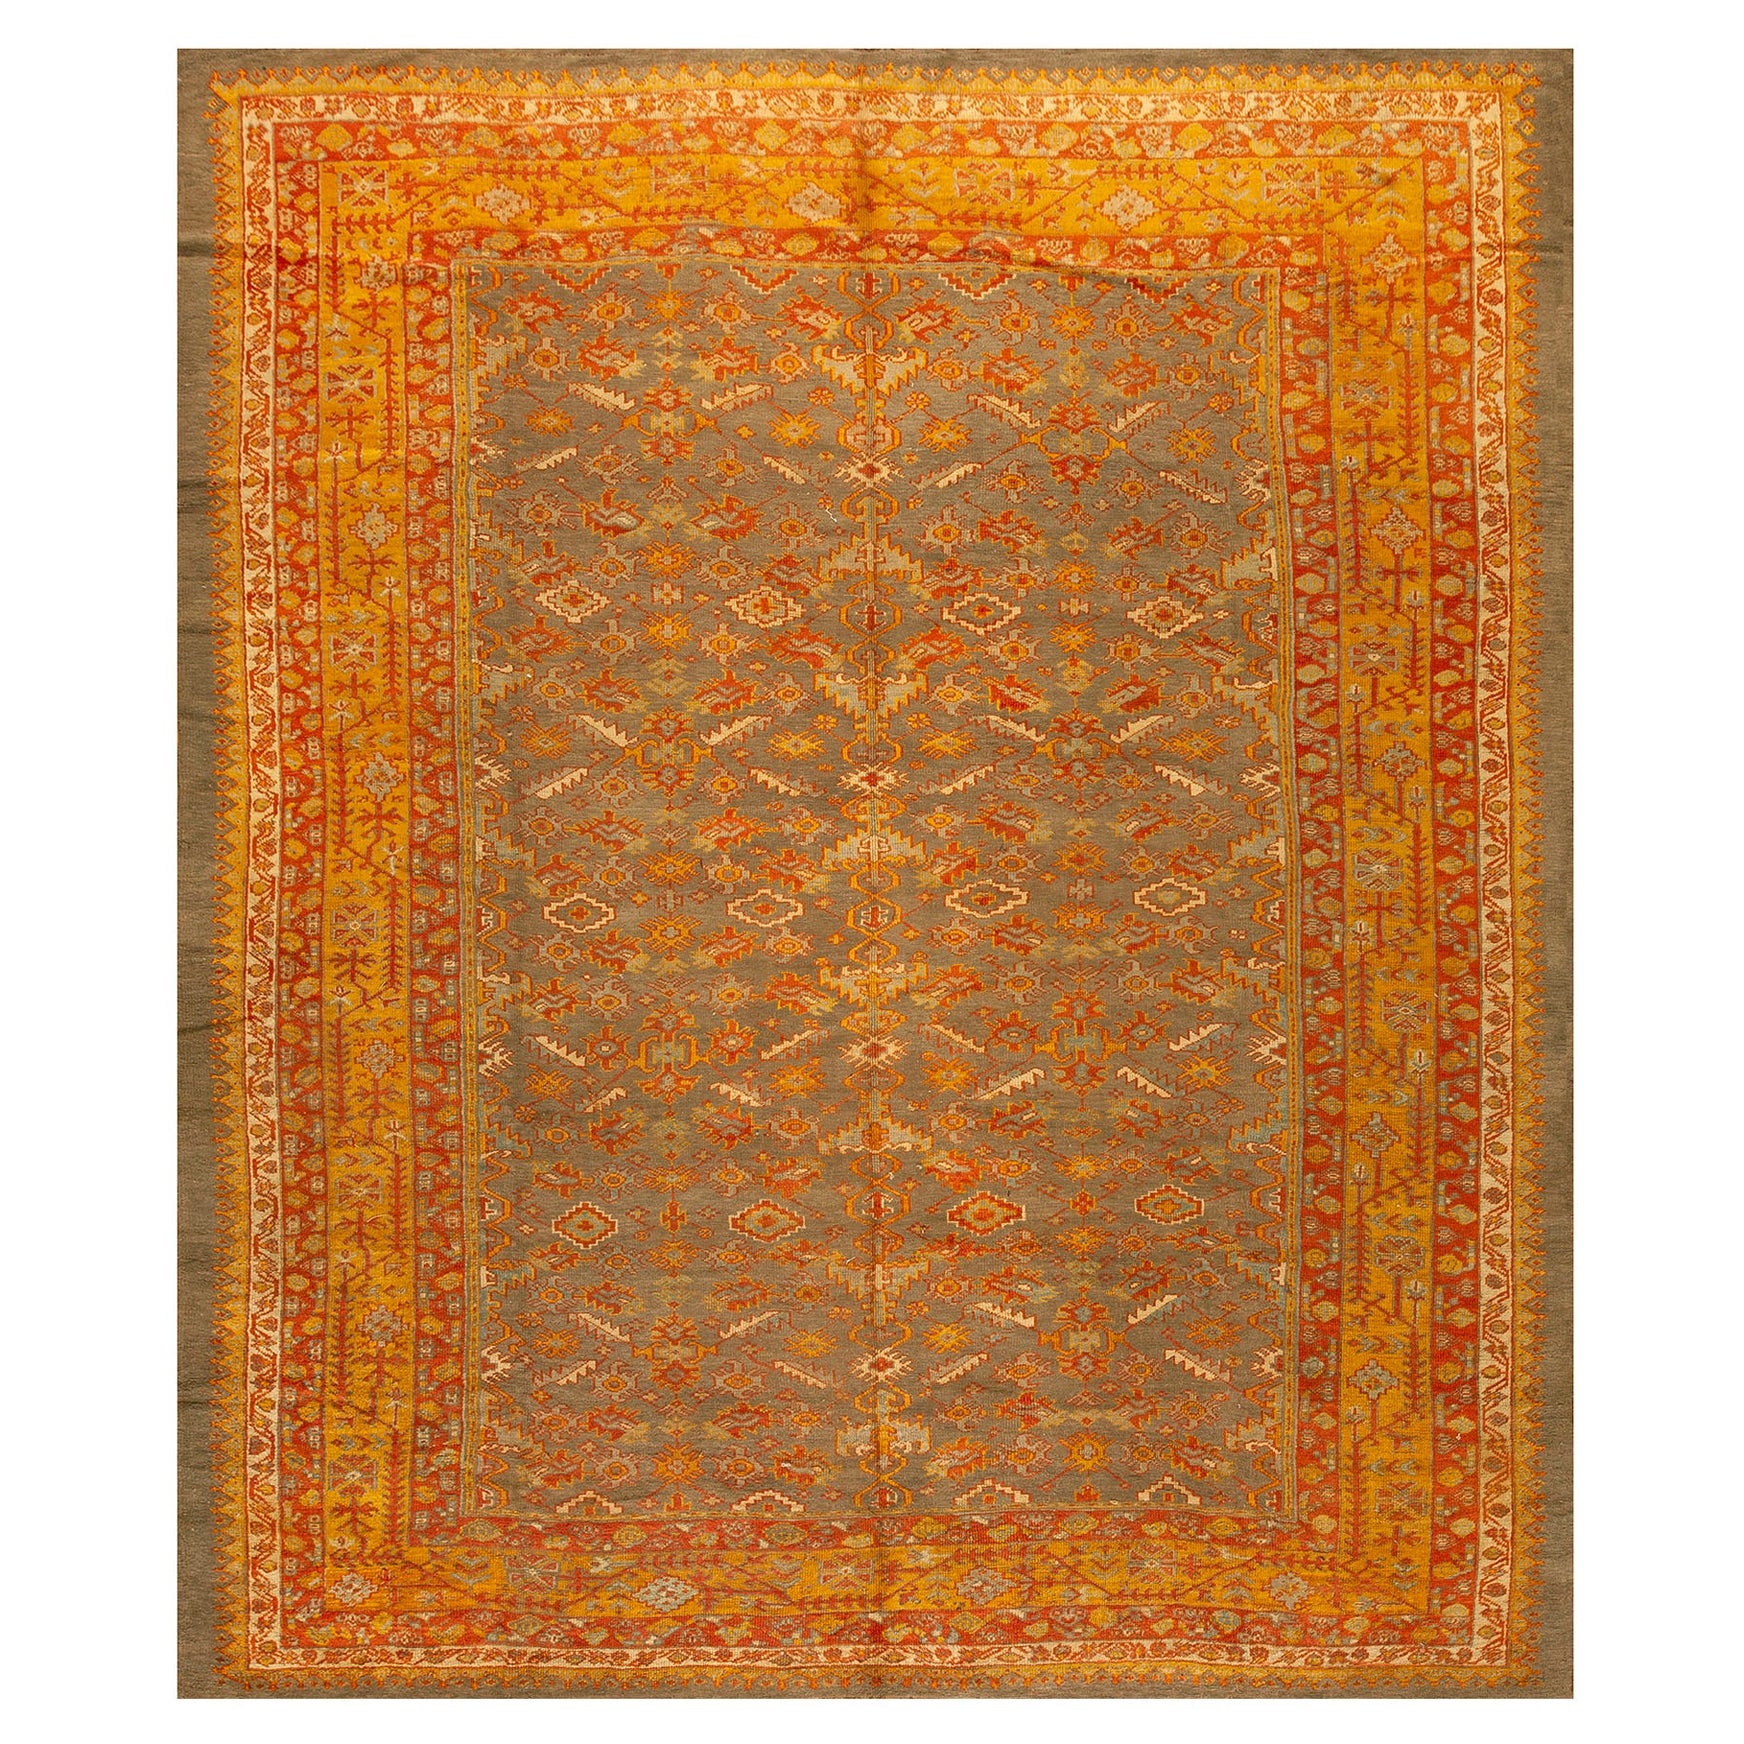 Late 19th Century Turkish Oushak Carpet ( 9'7'' x 11'3'' - 292 x 343 cm)